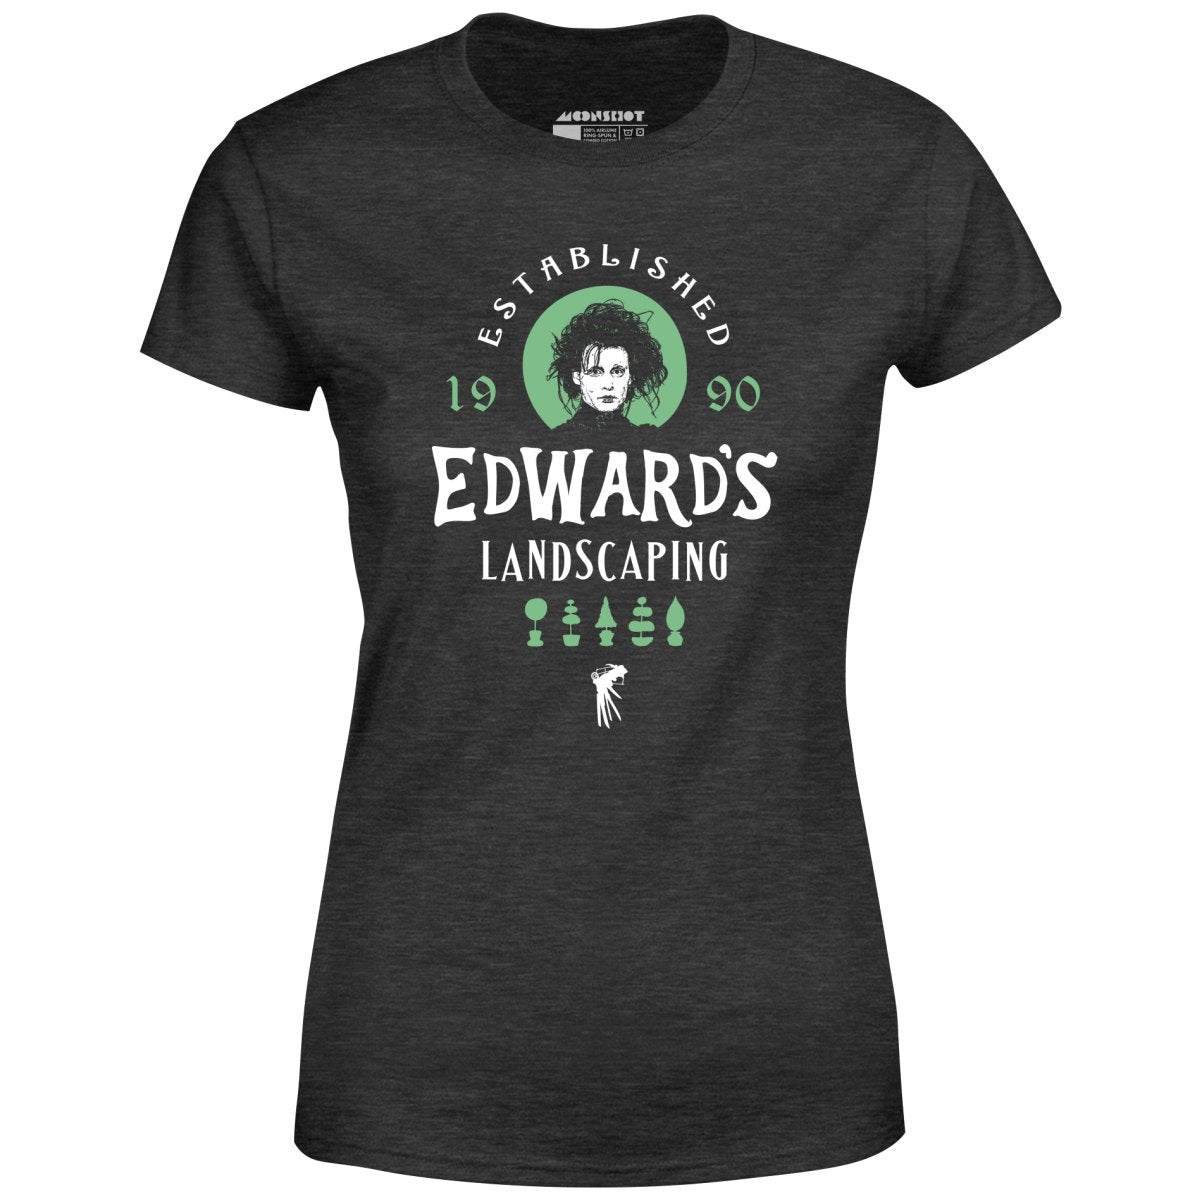 Edward's Landscaping - Women's T-Shirt